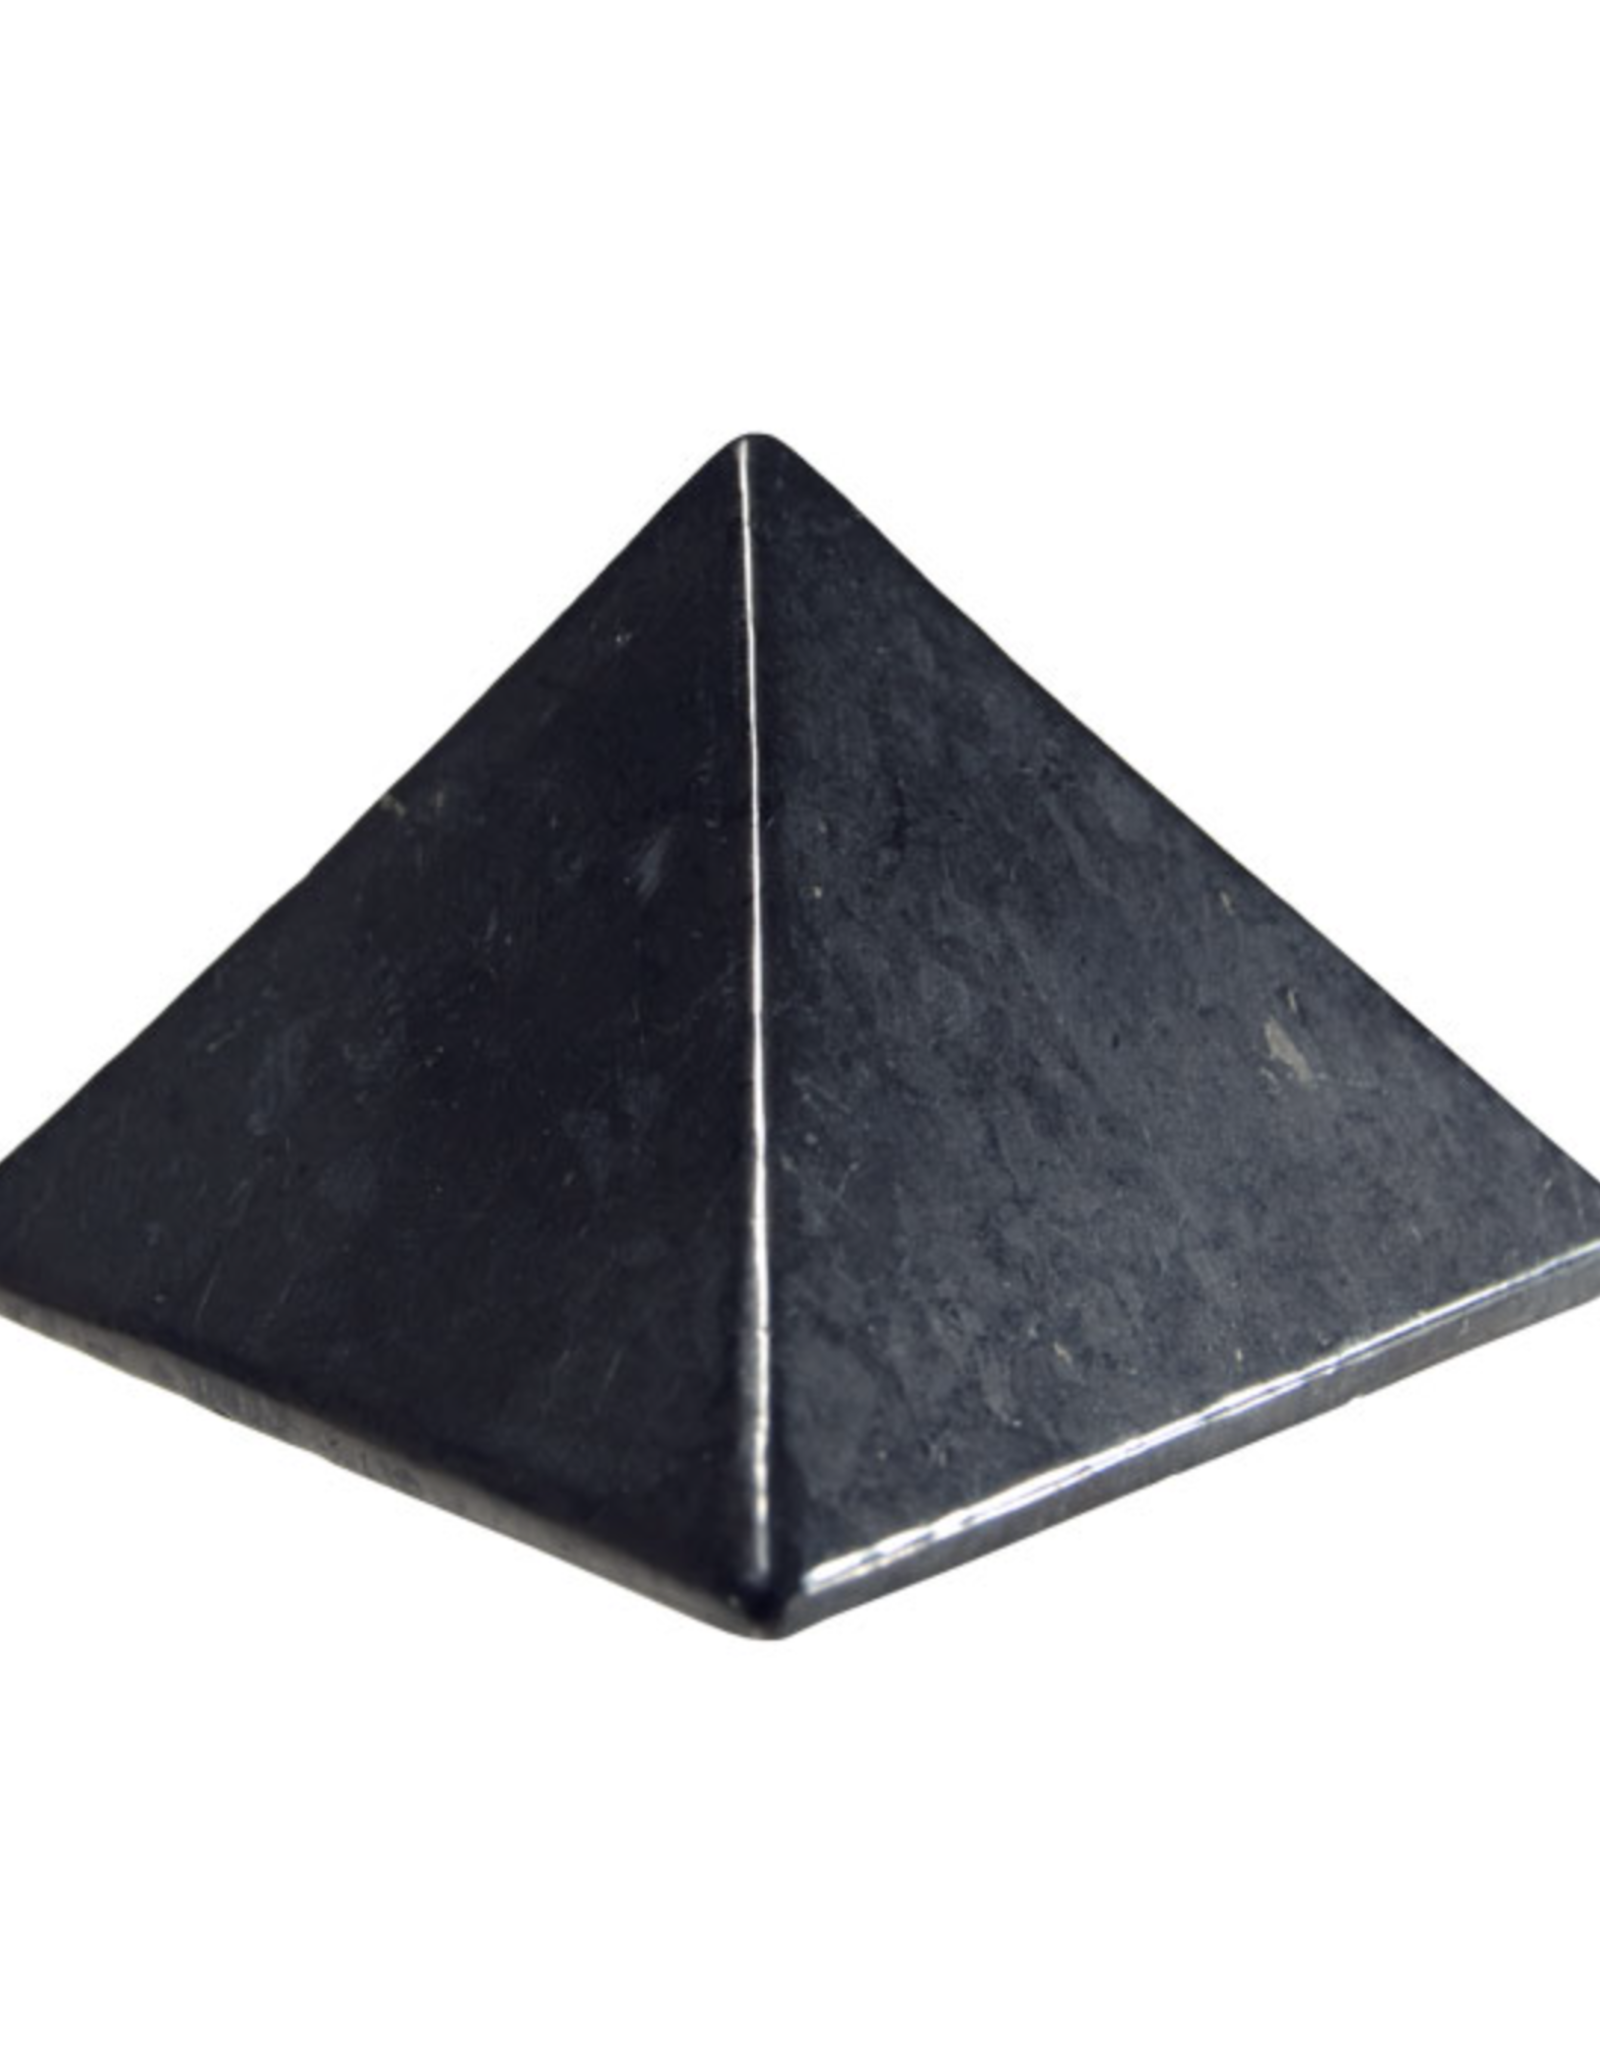 Pyramid - Shungite (~30mm)